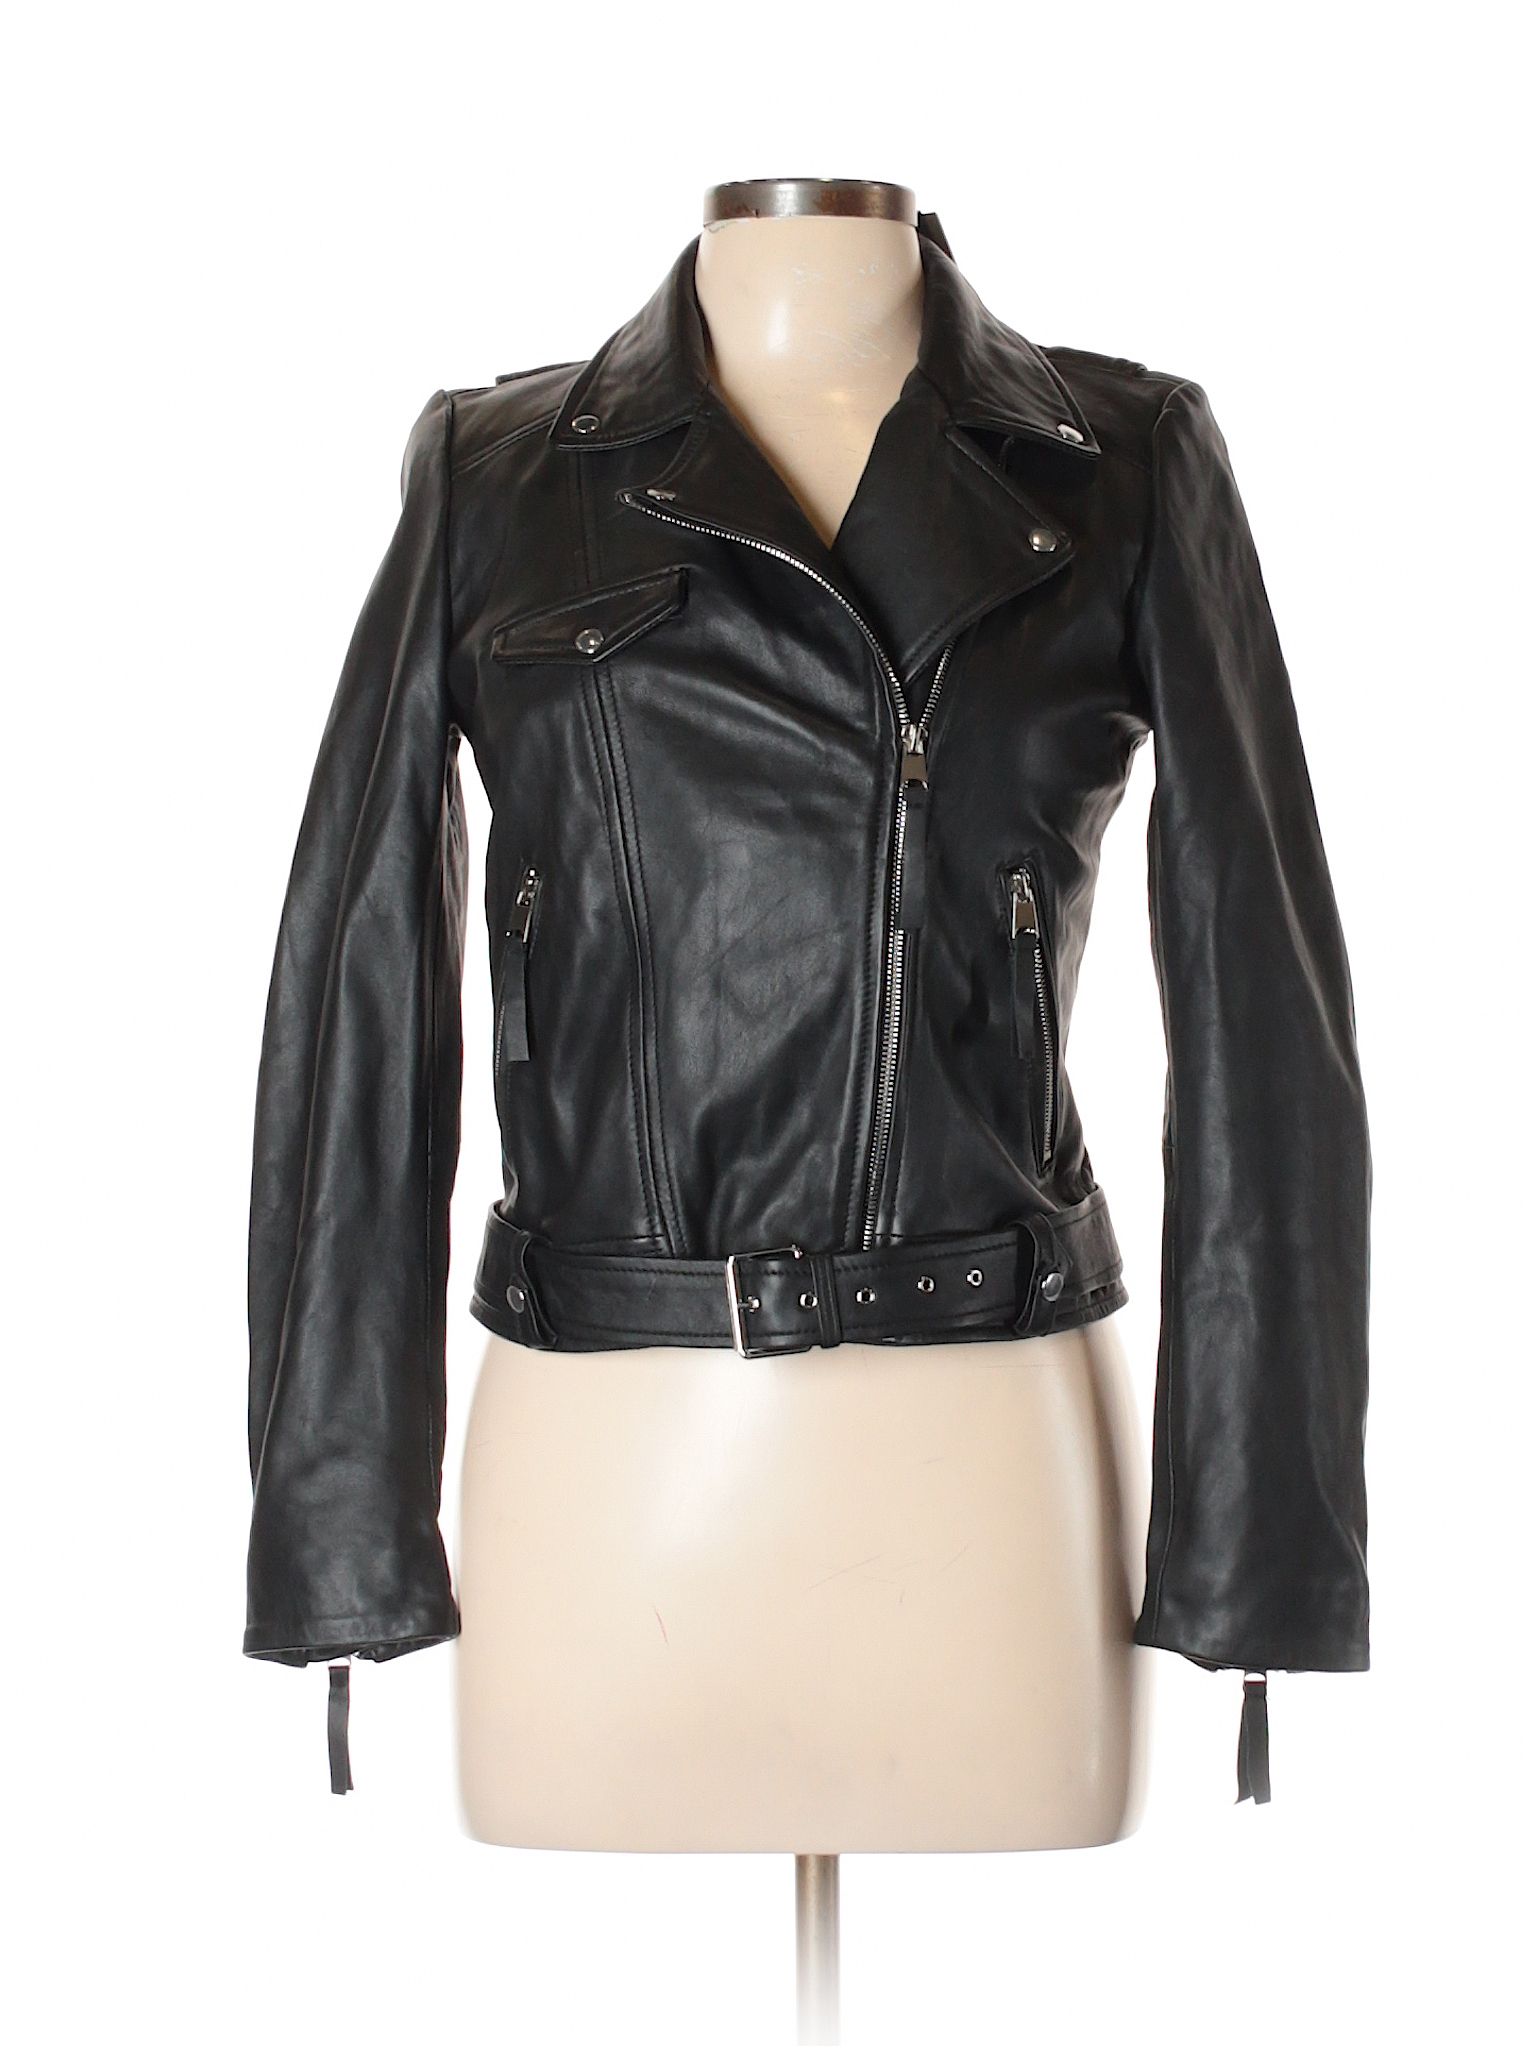 Trafaluc by Zara Leather Jacket Size 12: Black Women's Jackets & Outerwear - 33184321 | thredUP